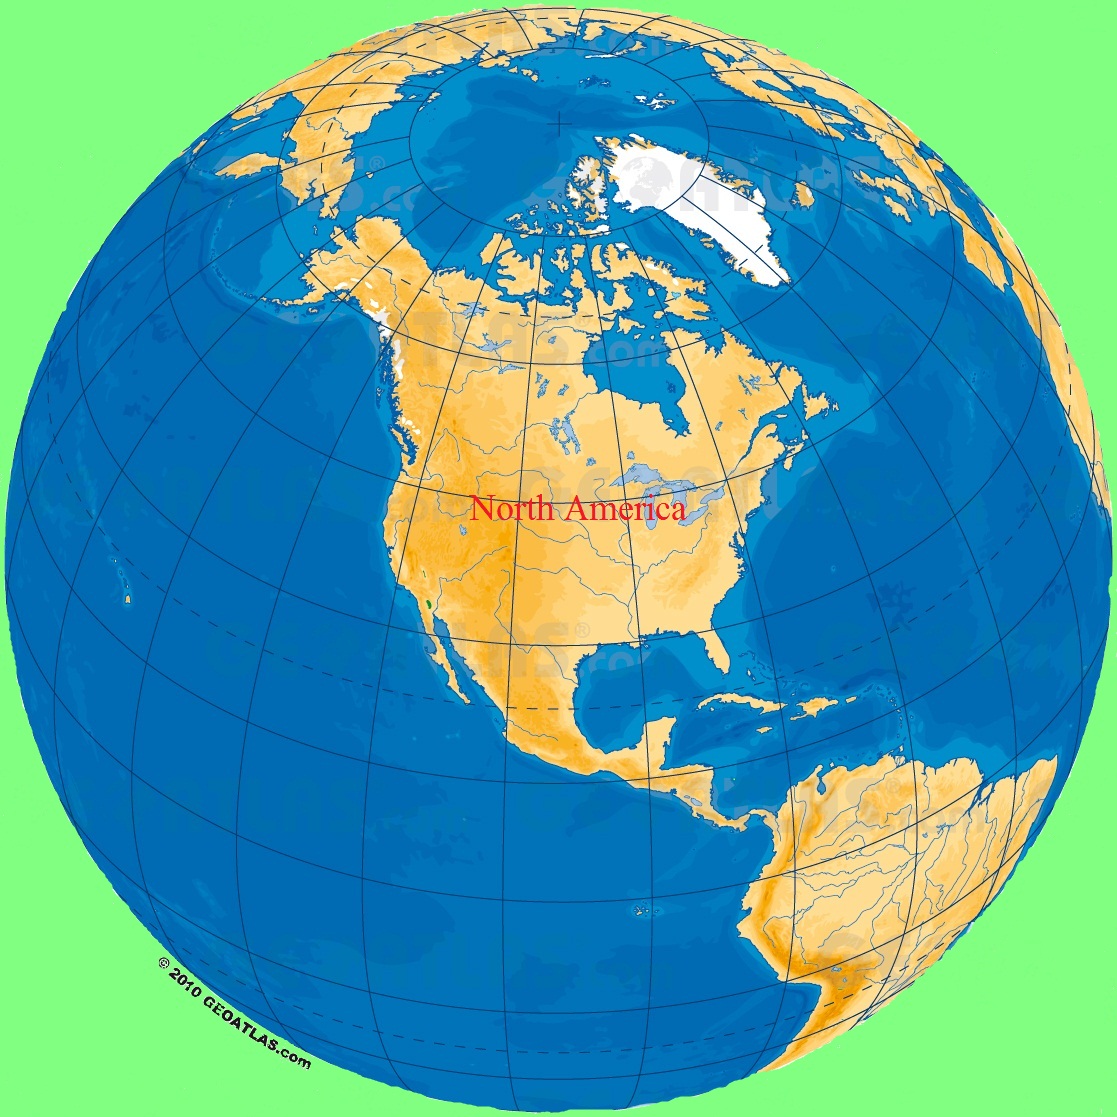 Сша полушарие. Северная Америка и Южная Америка на глобусе. Глобус земли Северная Америка. Северная Америка на глобусе. Карта Америки на глобусе.